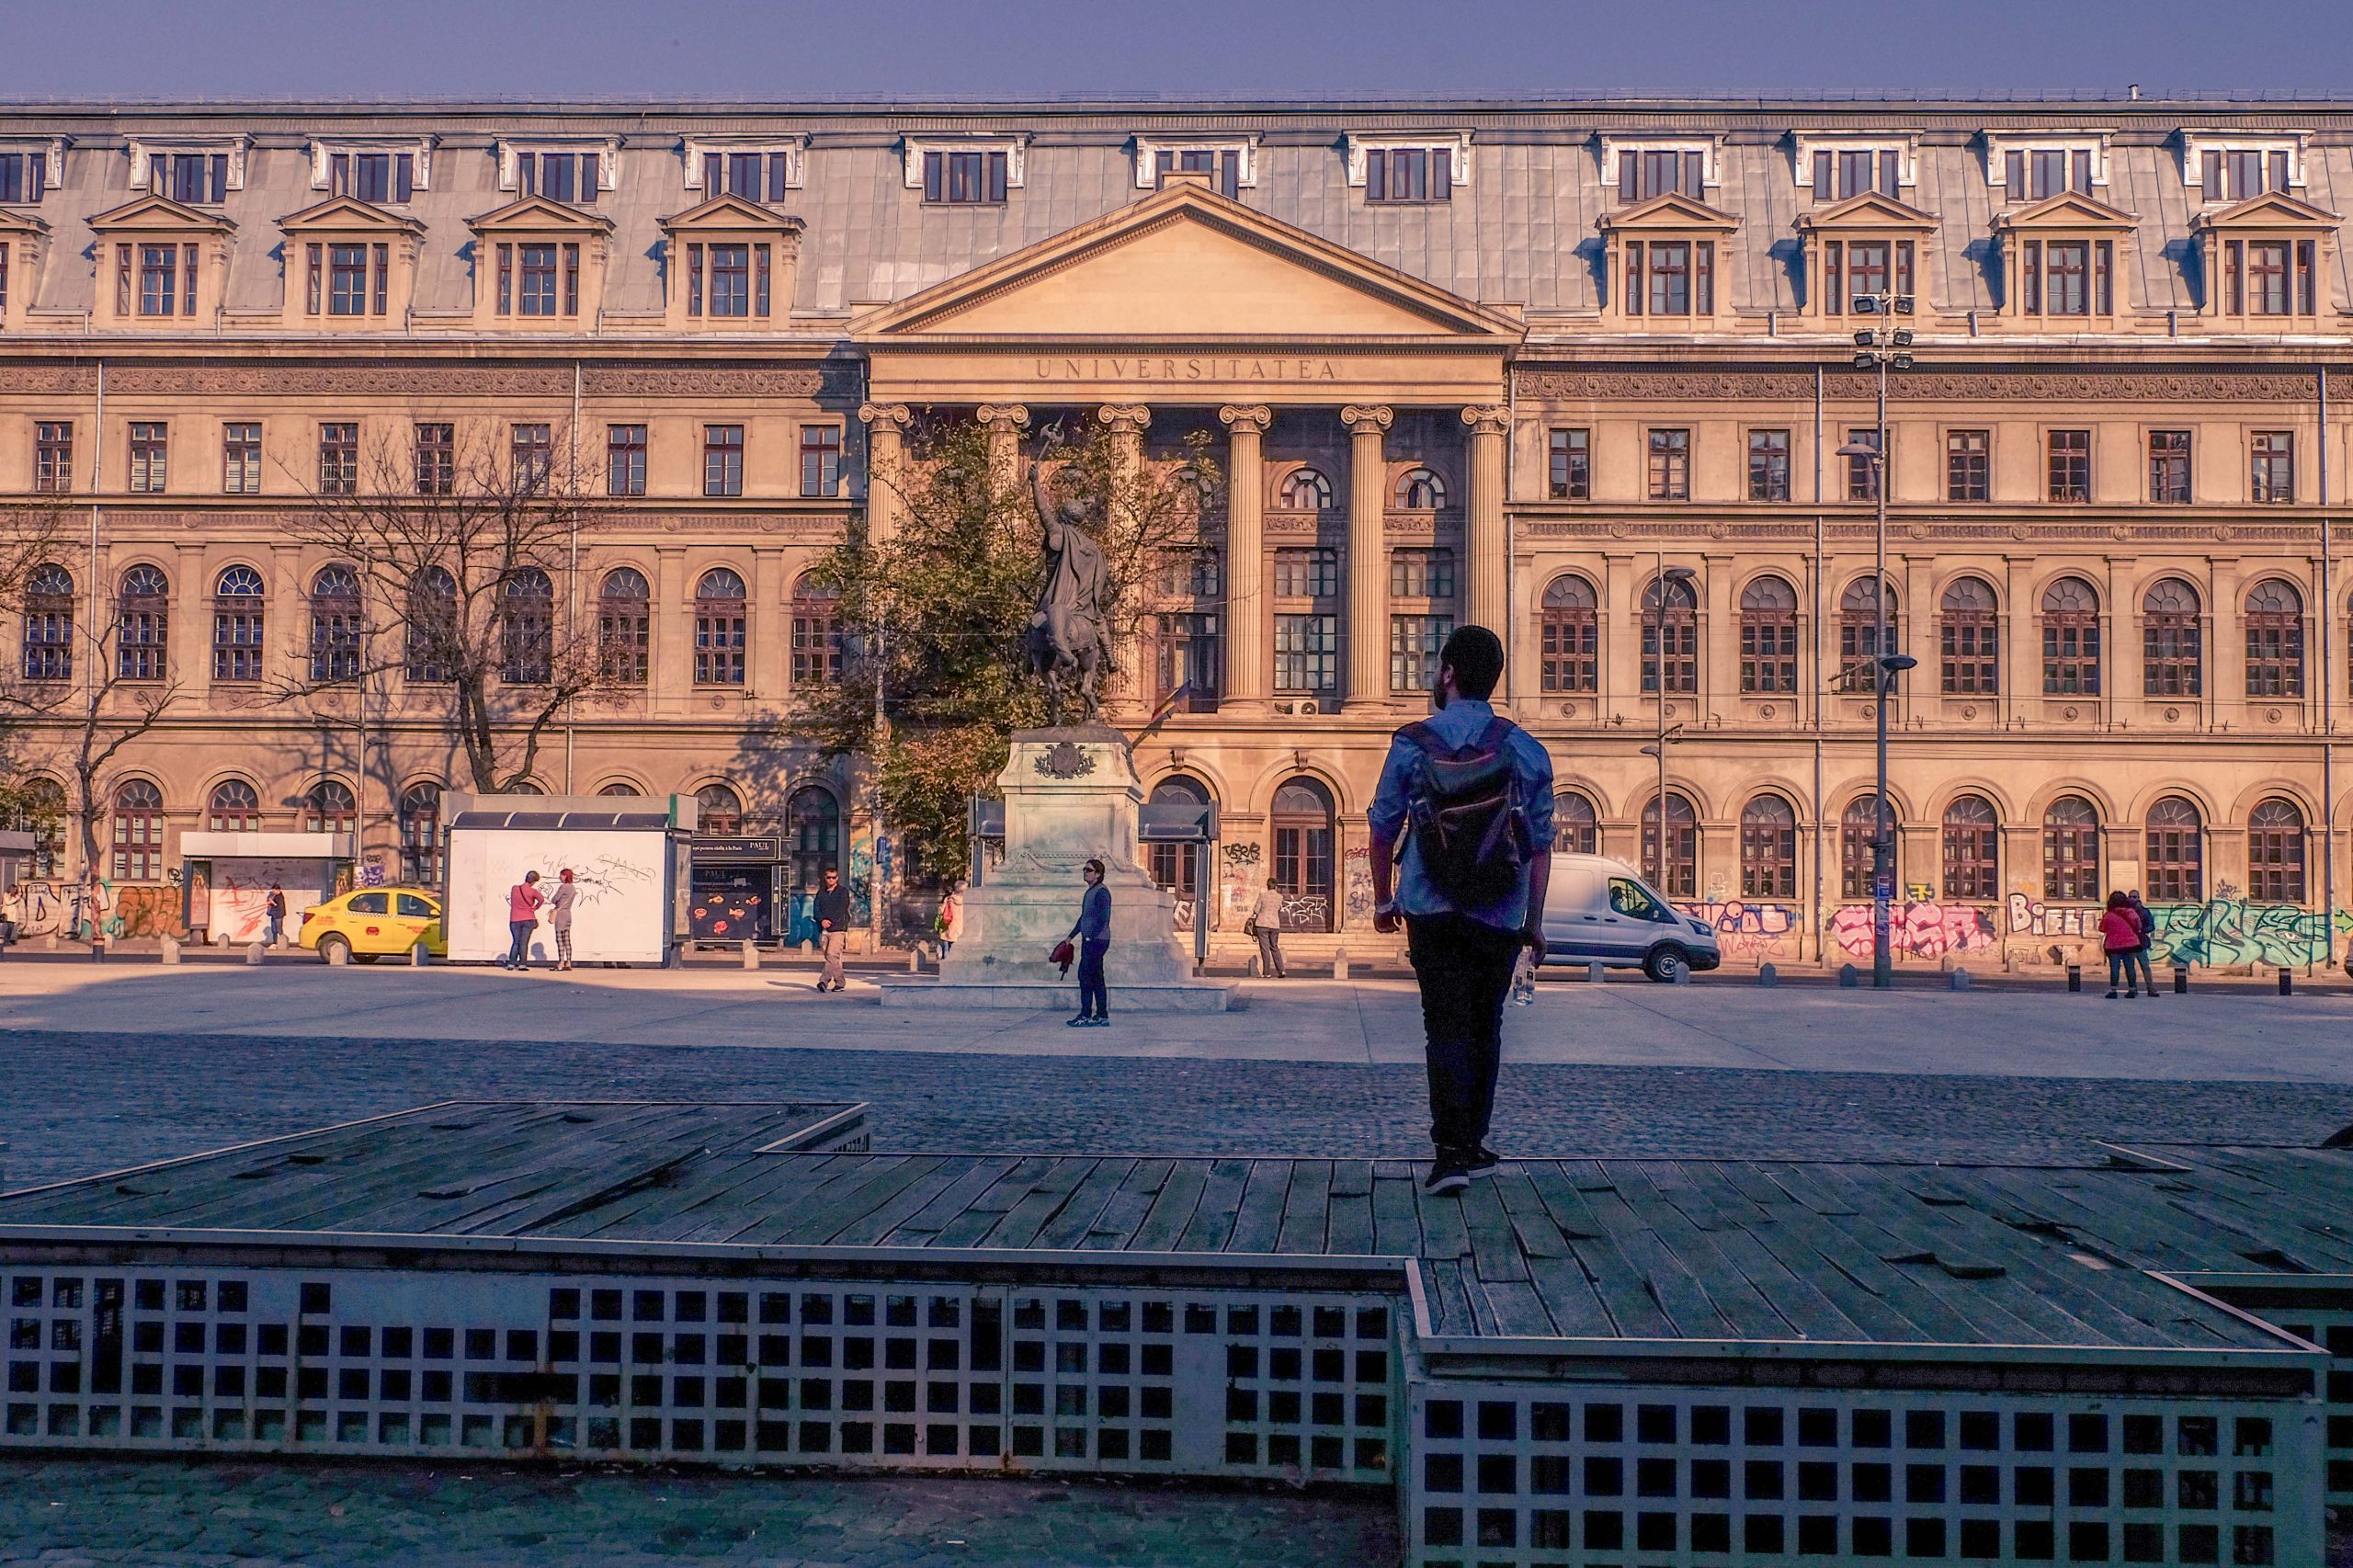 University Square Bucharest